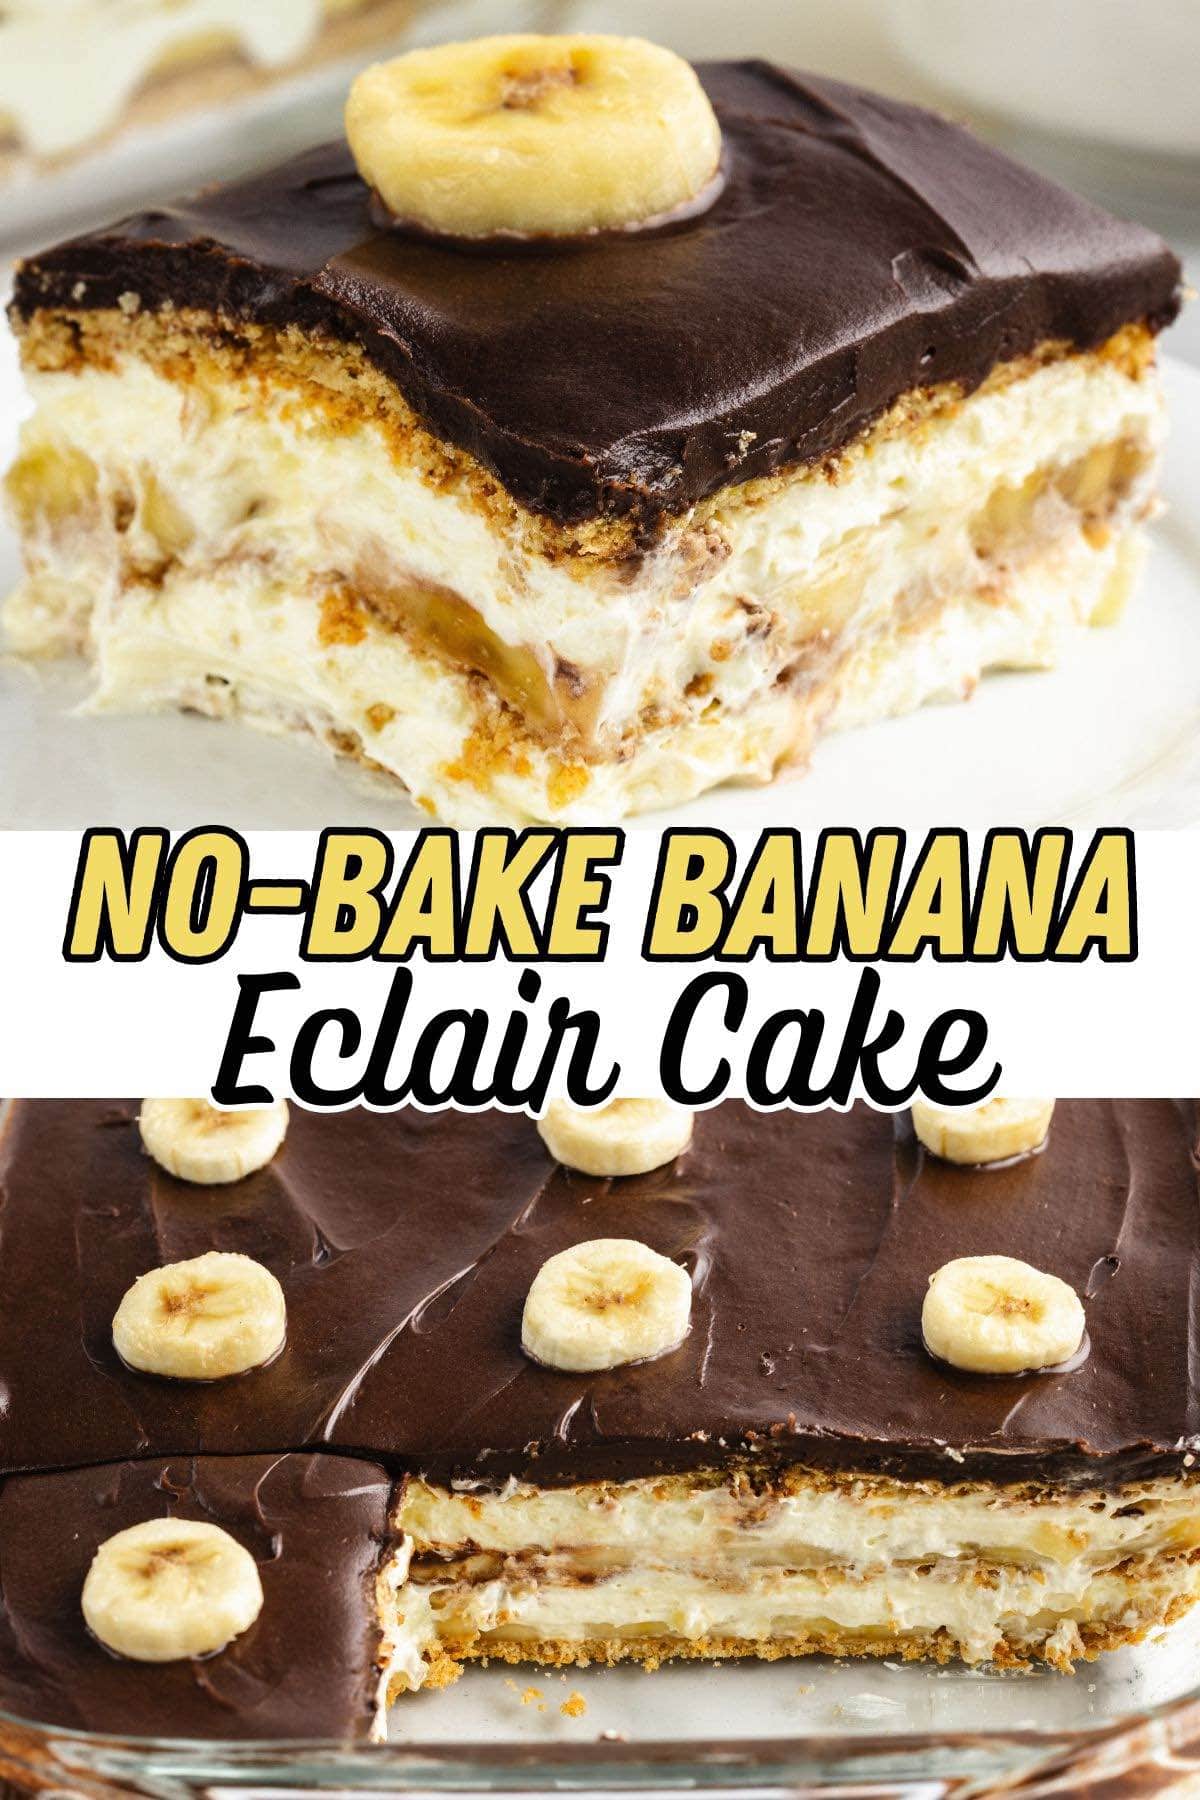 banana eclair cake pins.